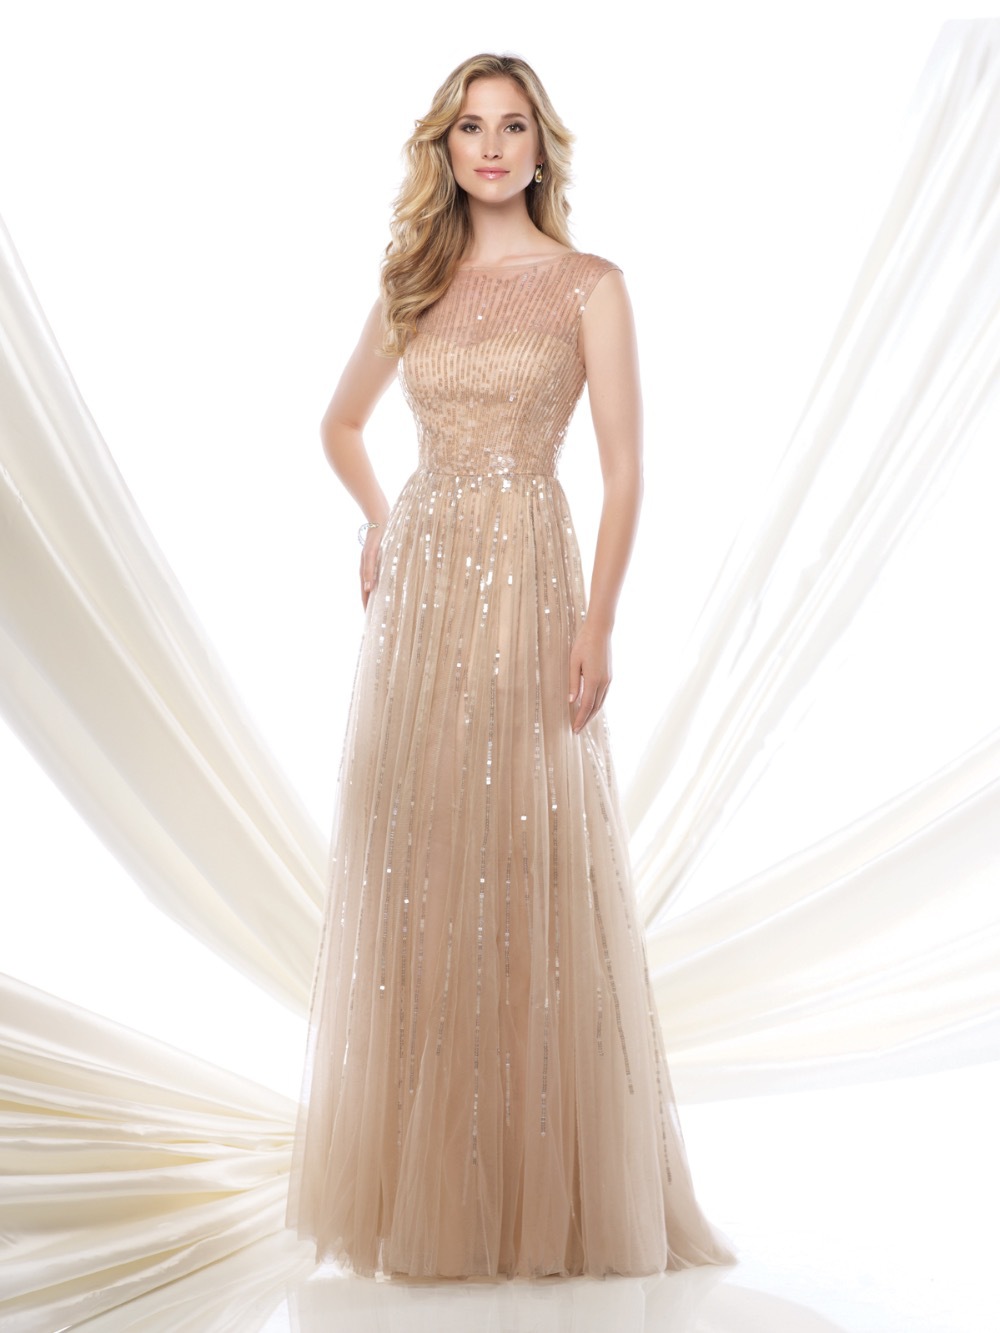 High End Prom Dresses - Cocktail Dresses 2016